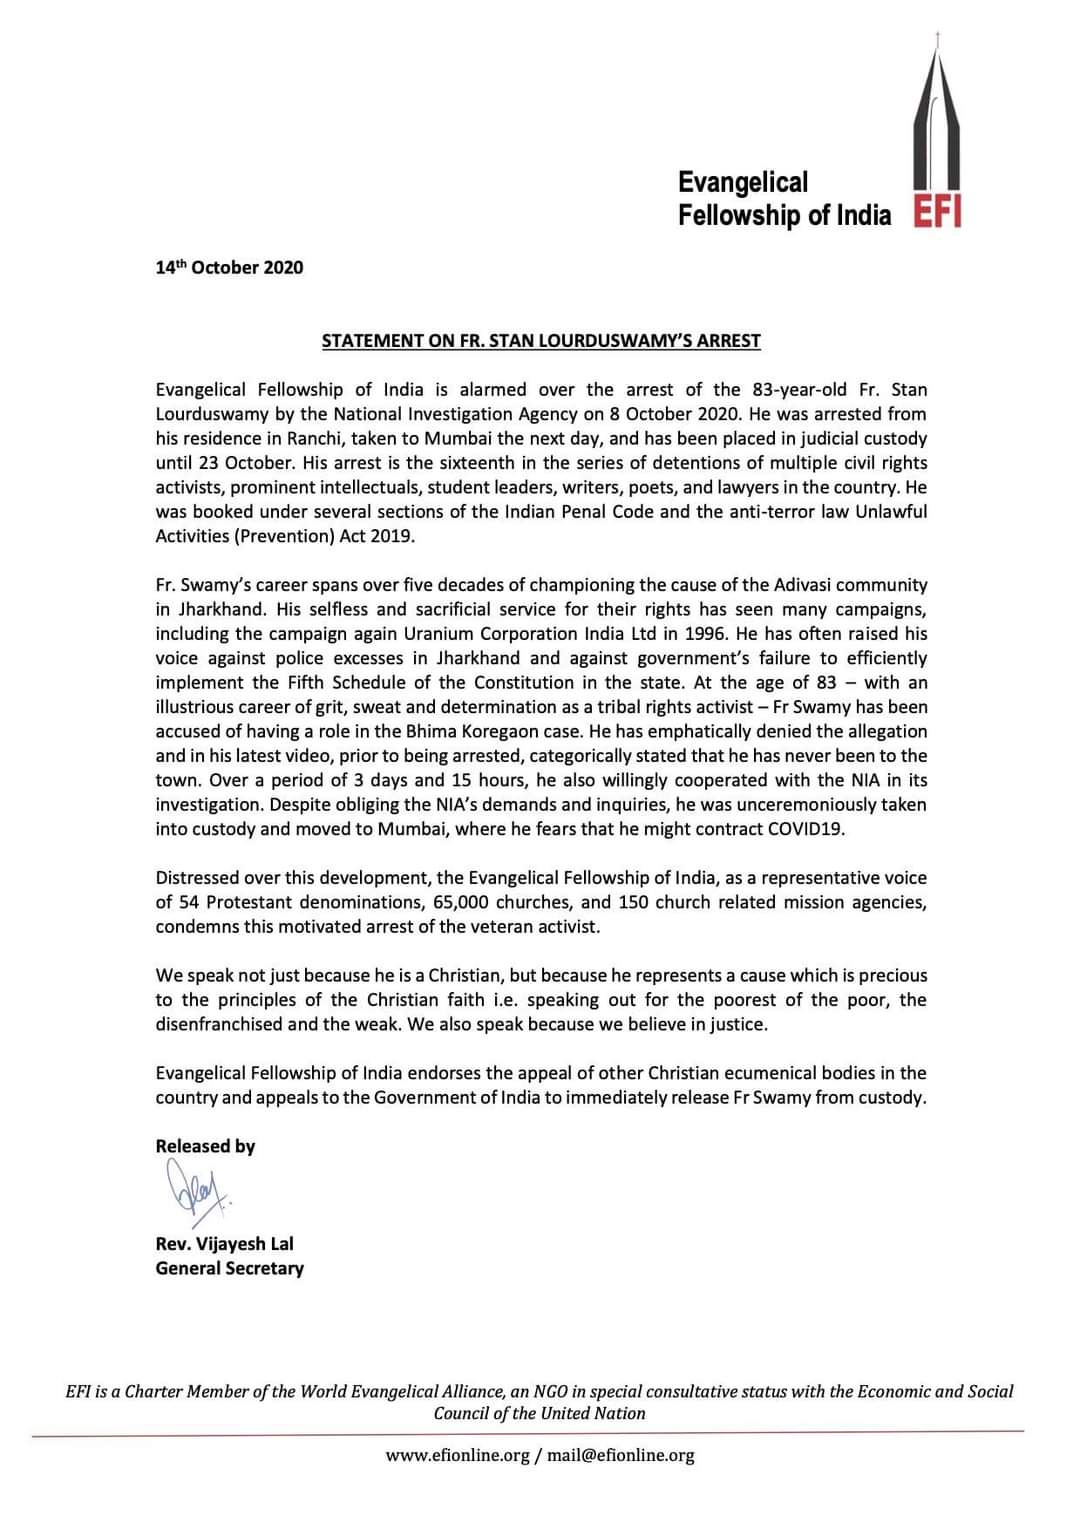 EFI statement